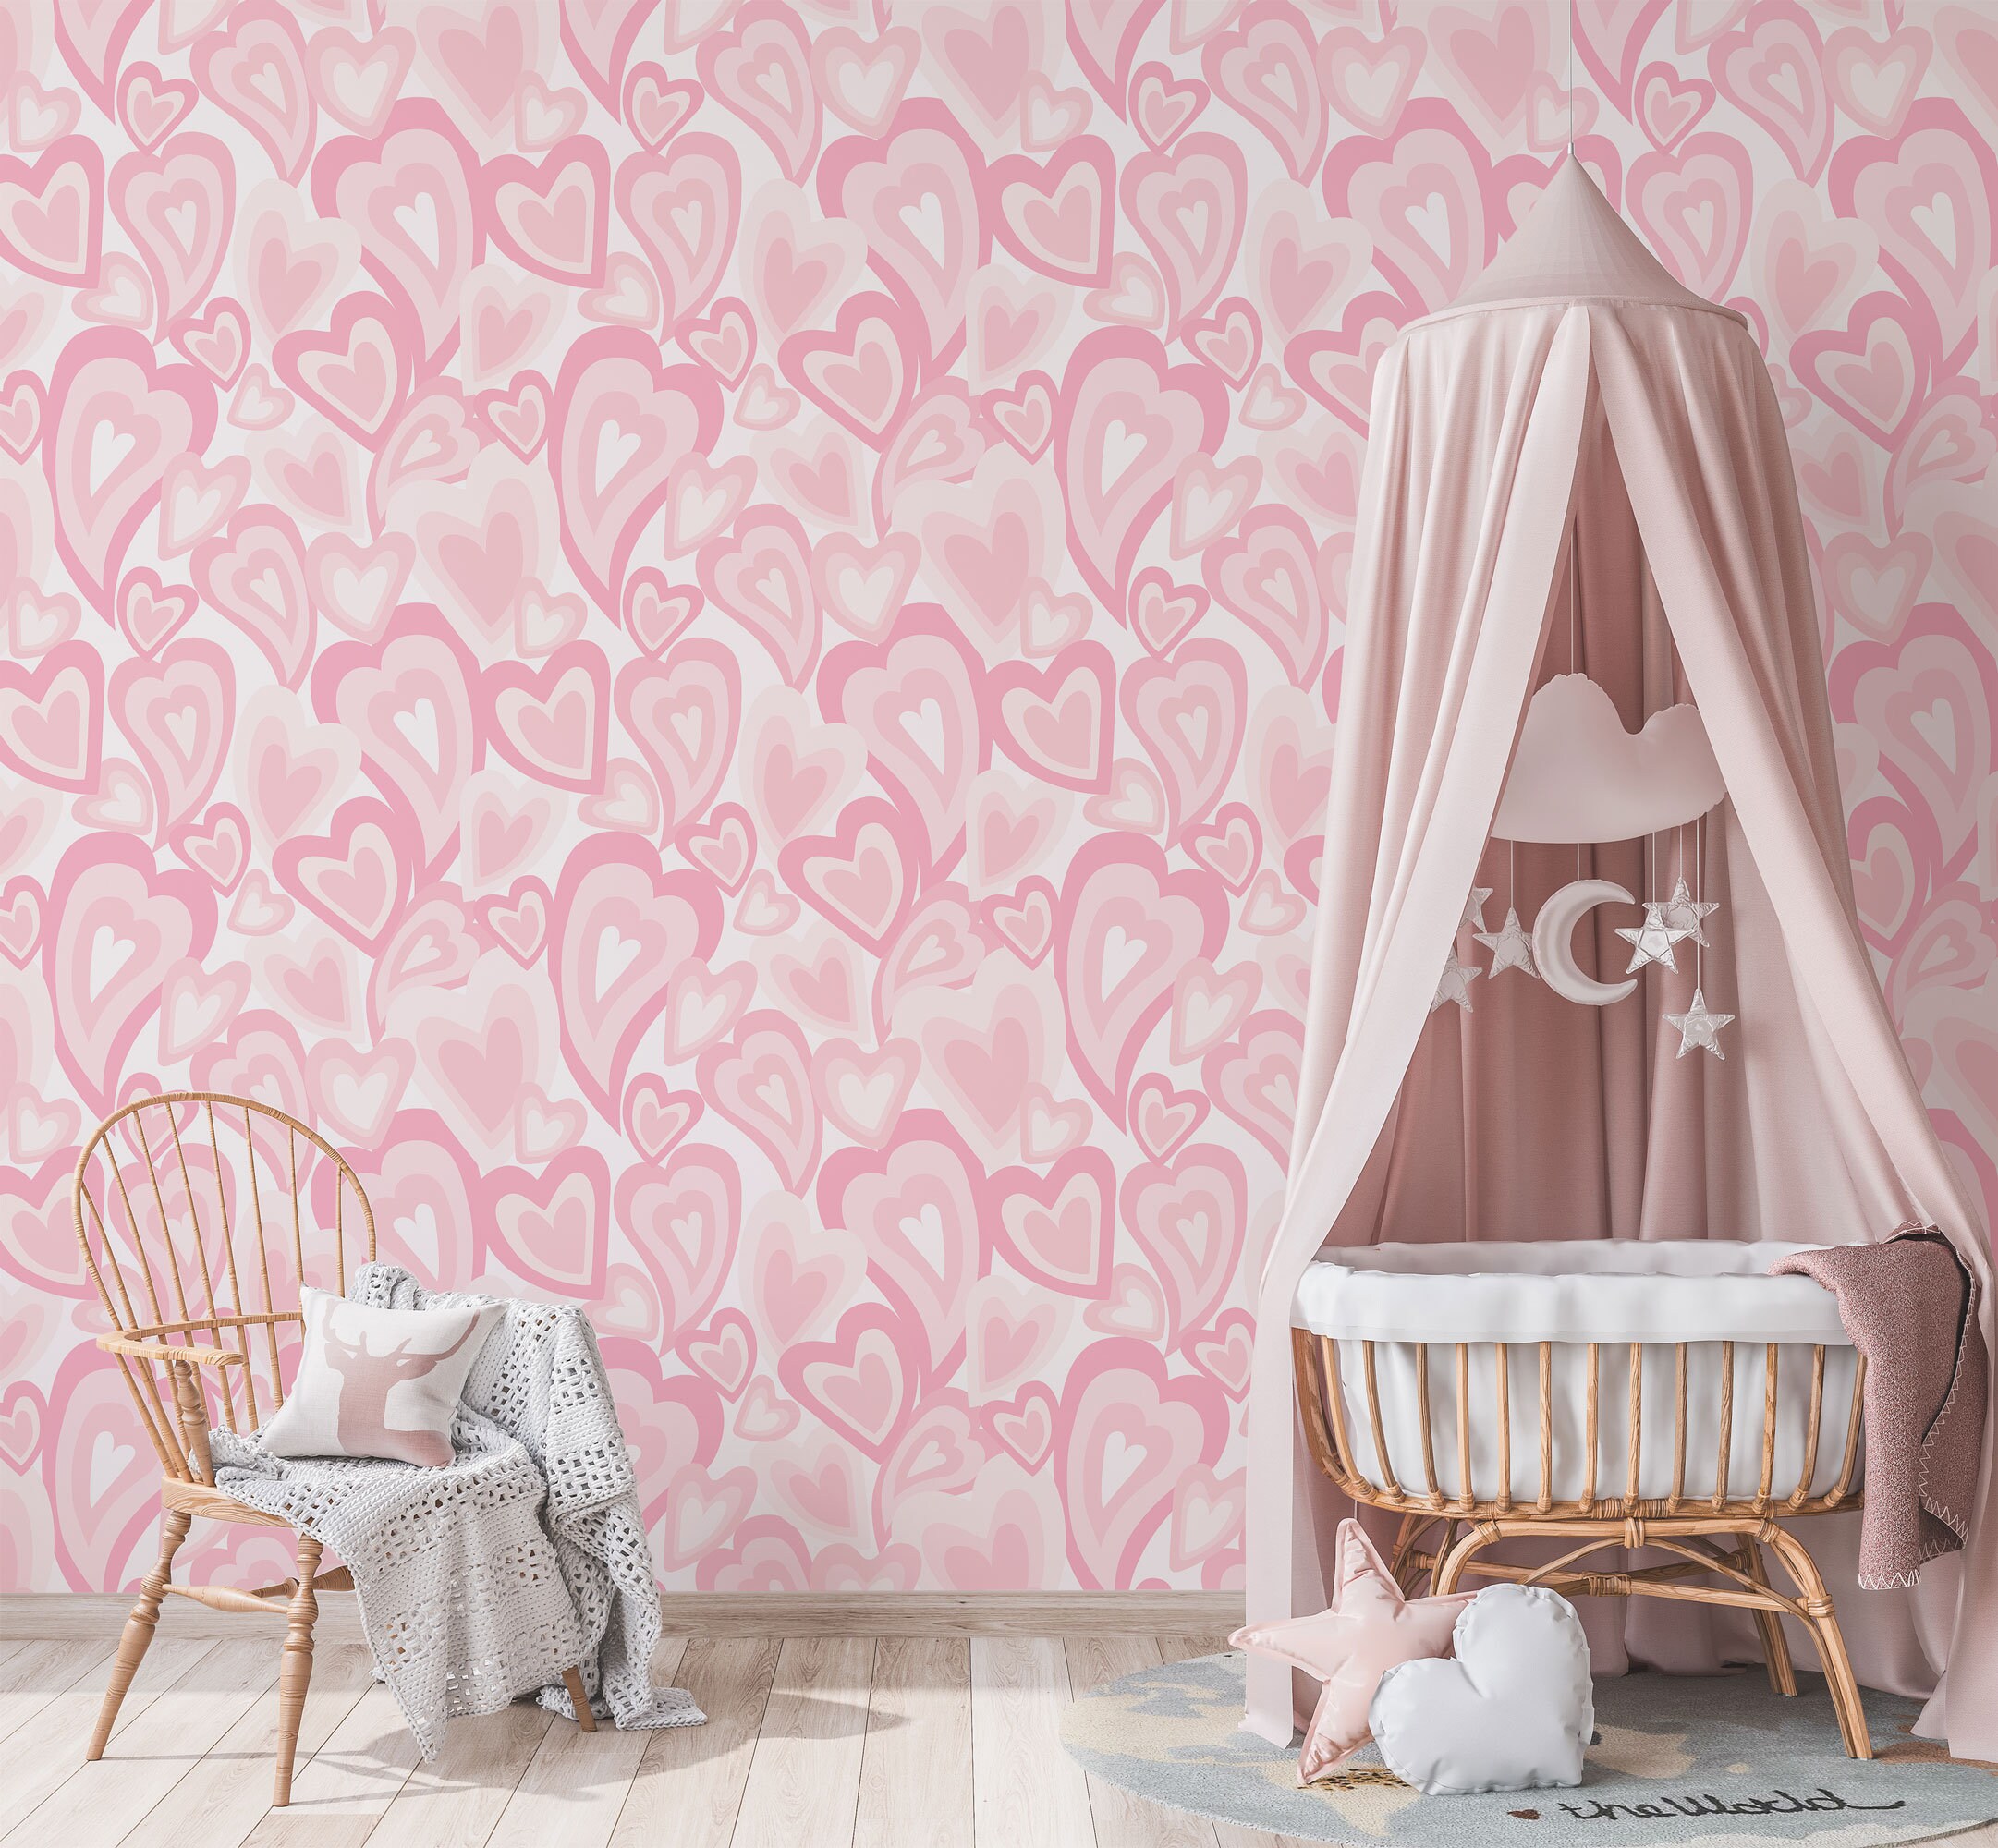 Peel & Stick Wallpaper 2FT Wide Love Heart Pink Pastel Custom